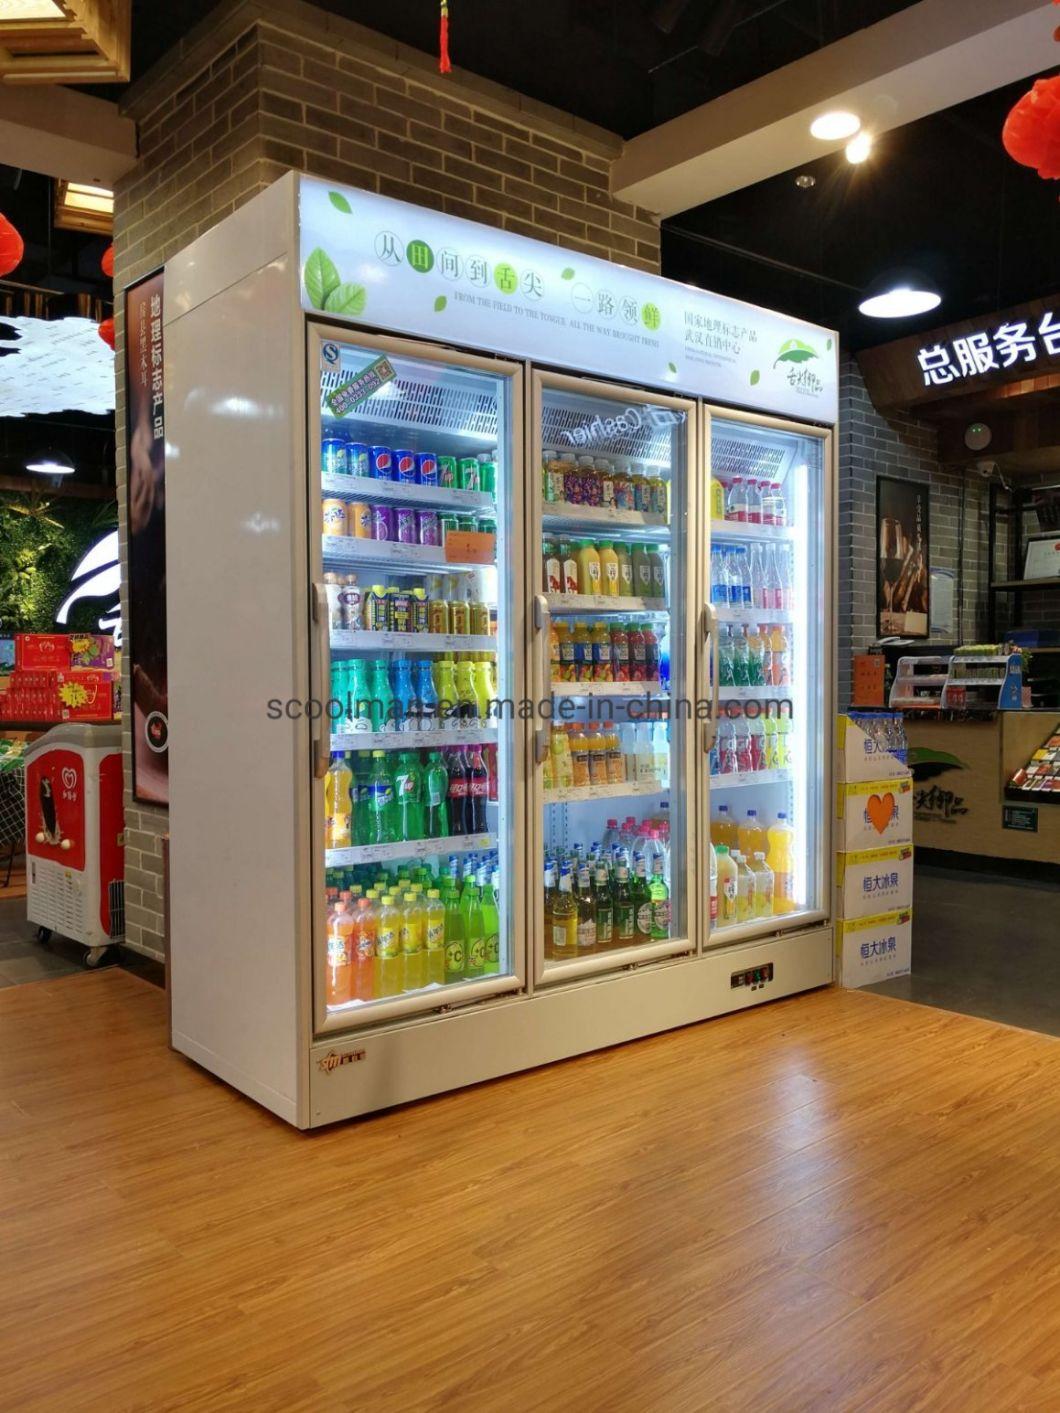 Vertical Double Glass Door Soft Drink Beverage Display Cooler Showcase Cooler Upright Refrigerator